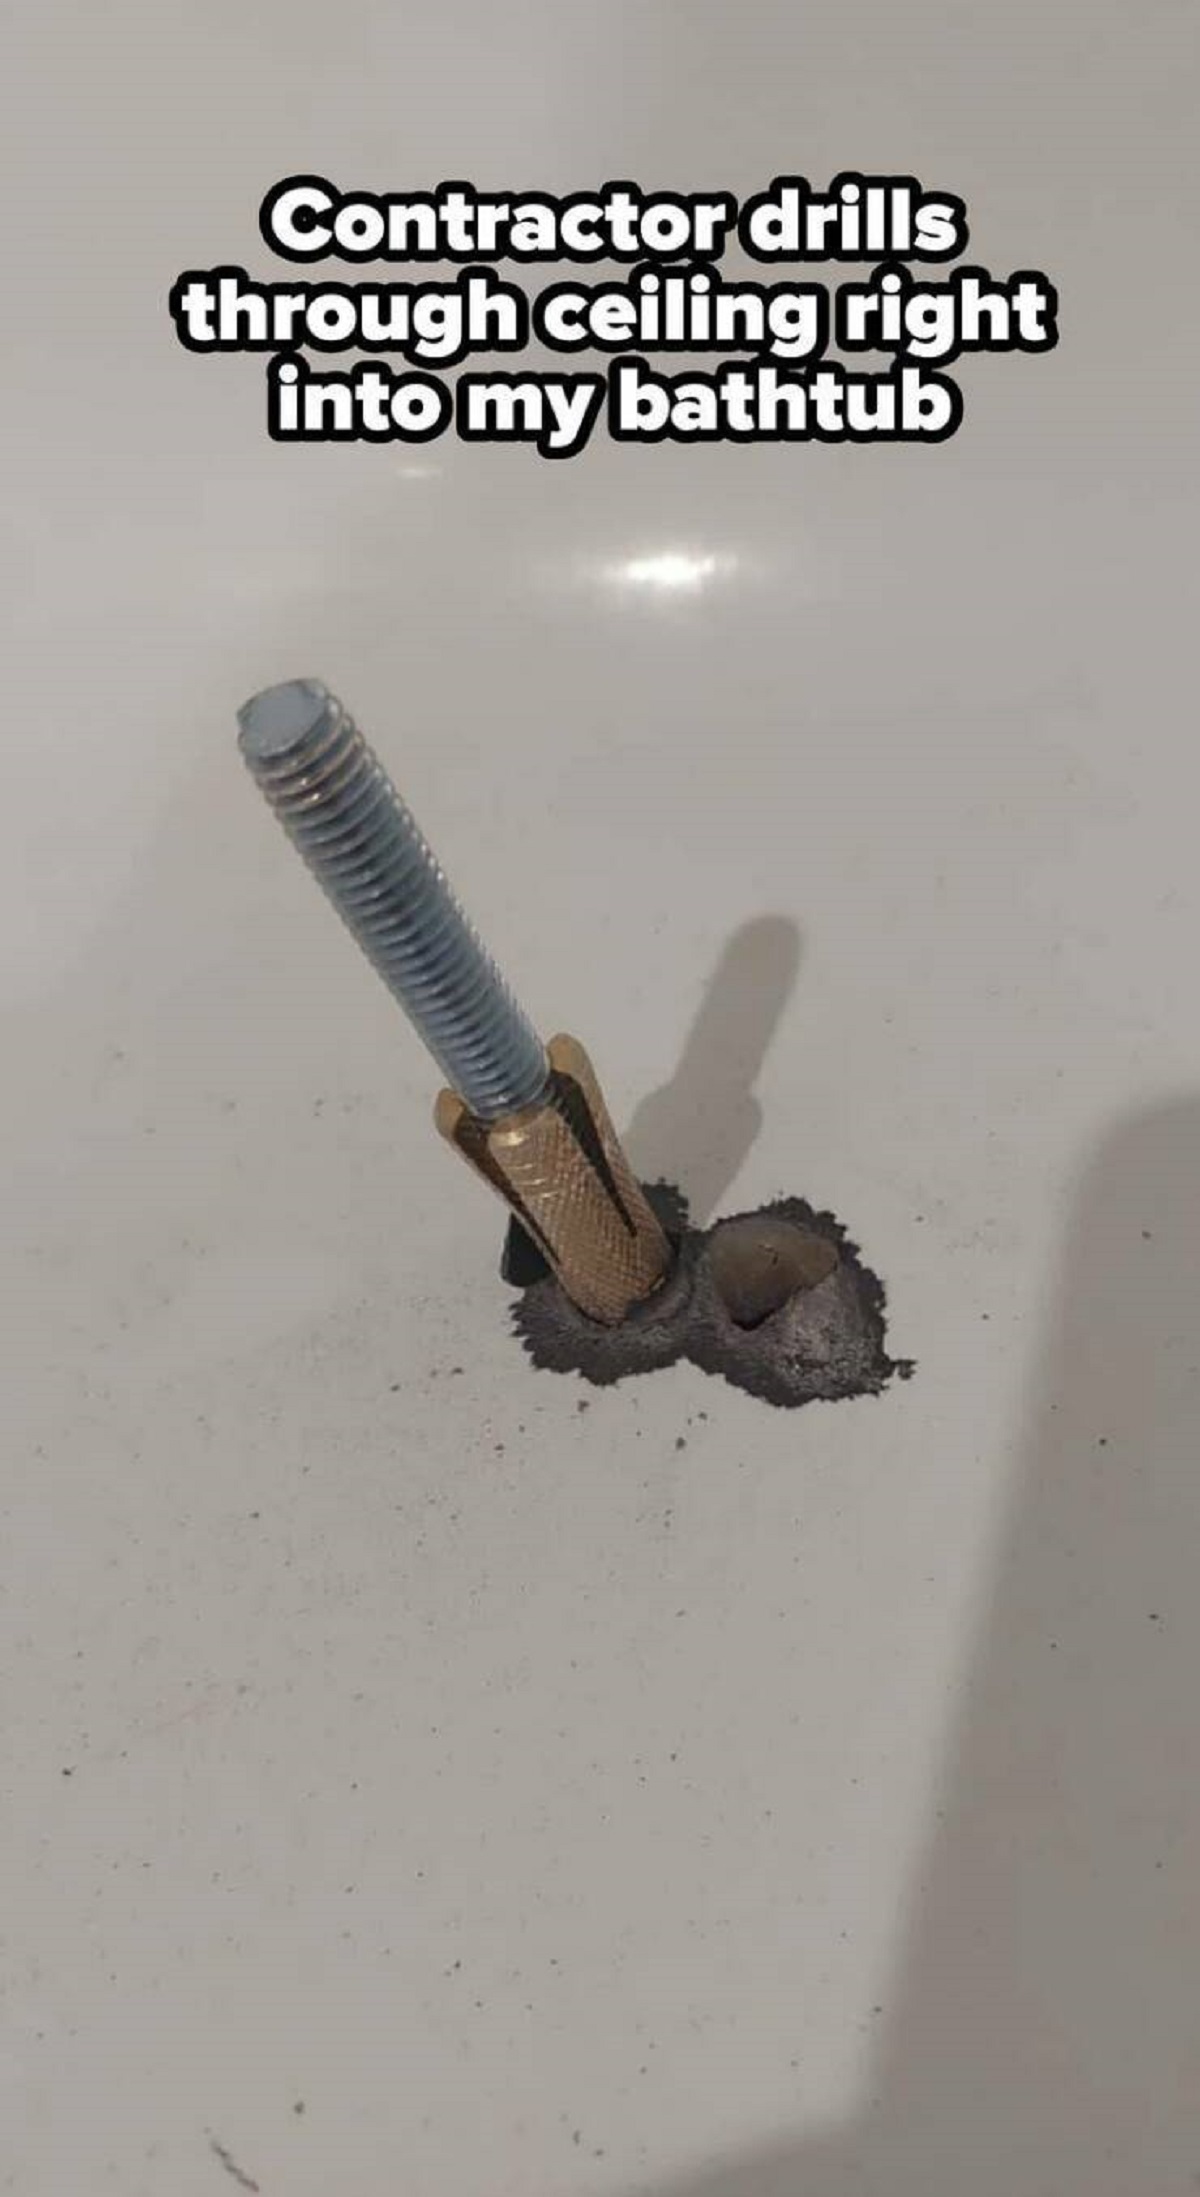 garden tool - Contractor drills through ceiling right into my bathtub